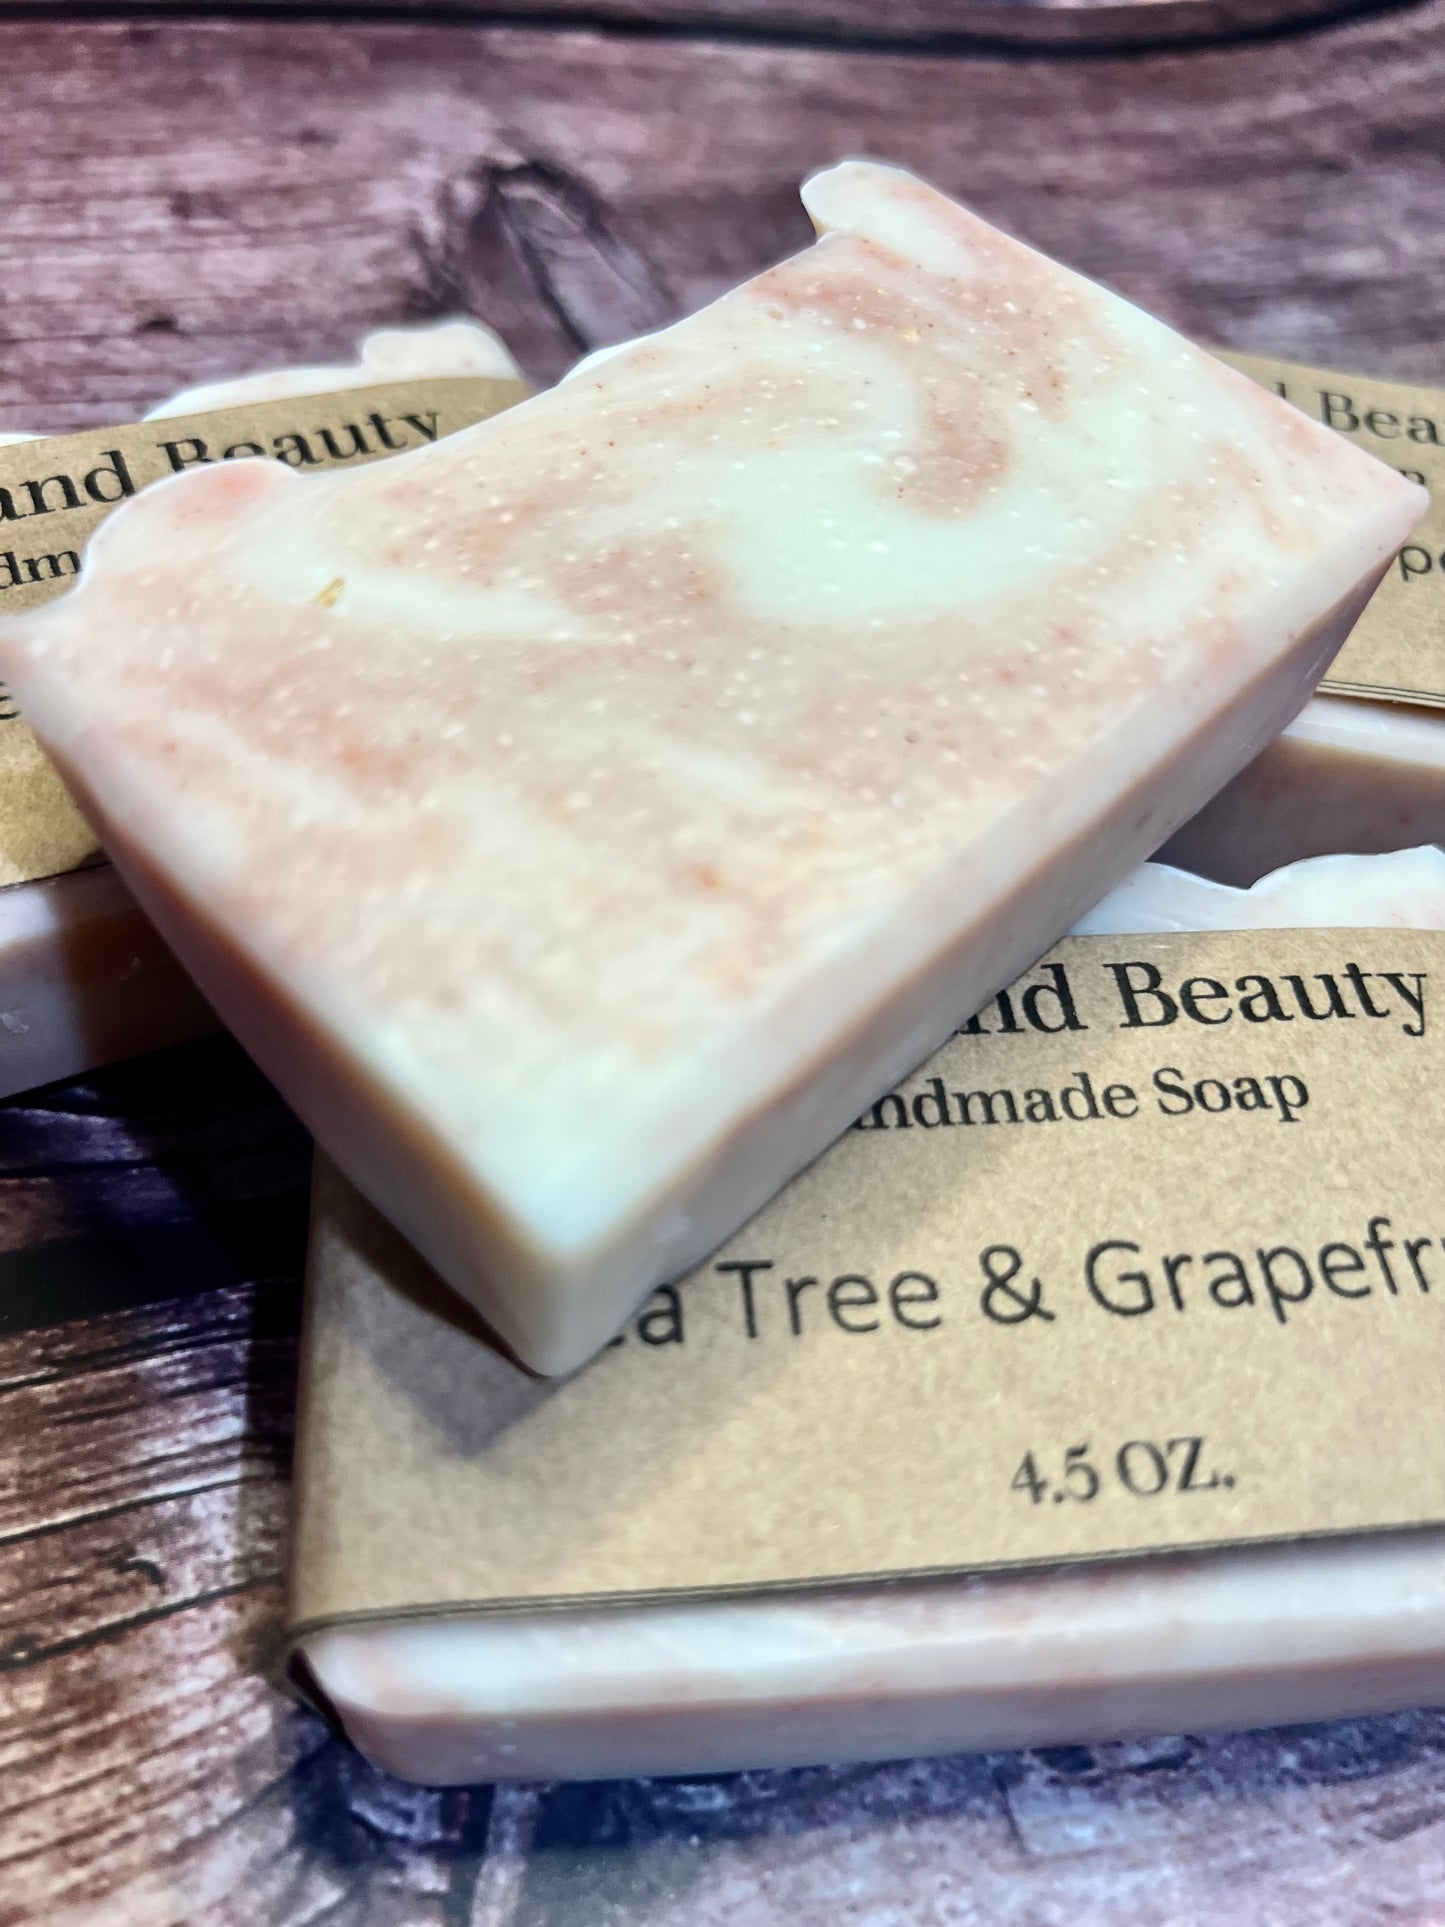 Tea Tree & Grapefruit soap (essential oil)